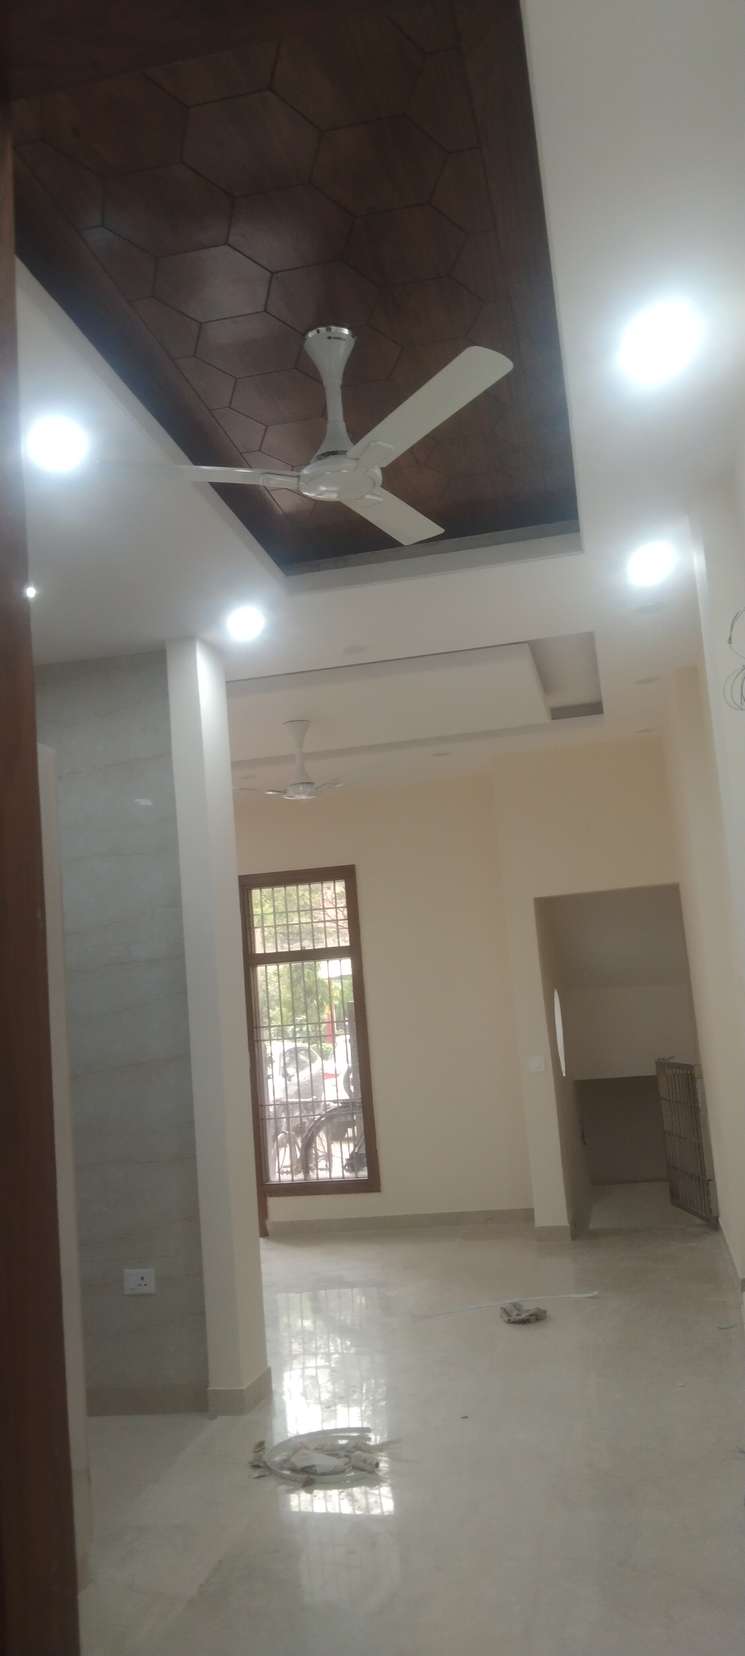 2 Bedroom 900 Sq.Ft. Independent House in Lajpat Nagar I Delhi